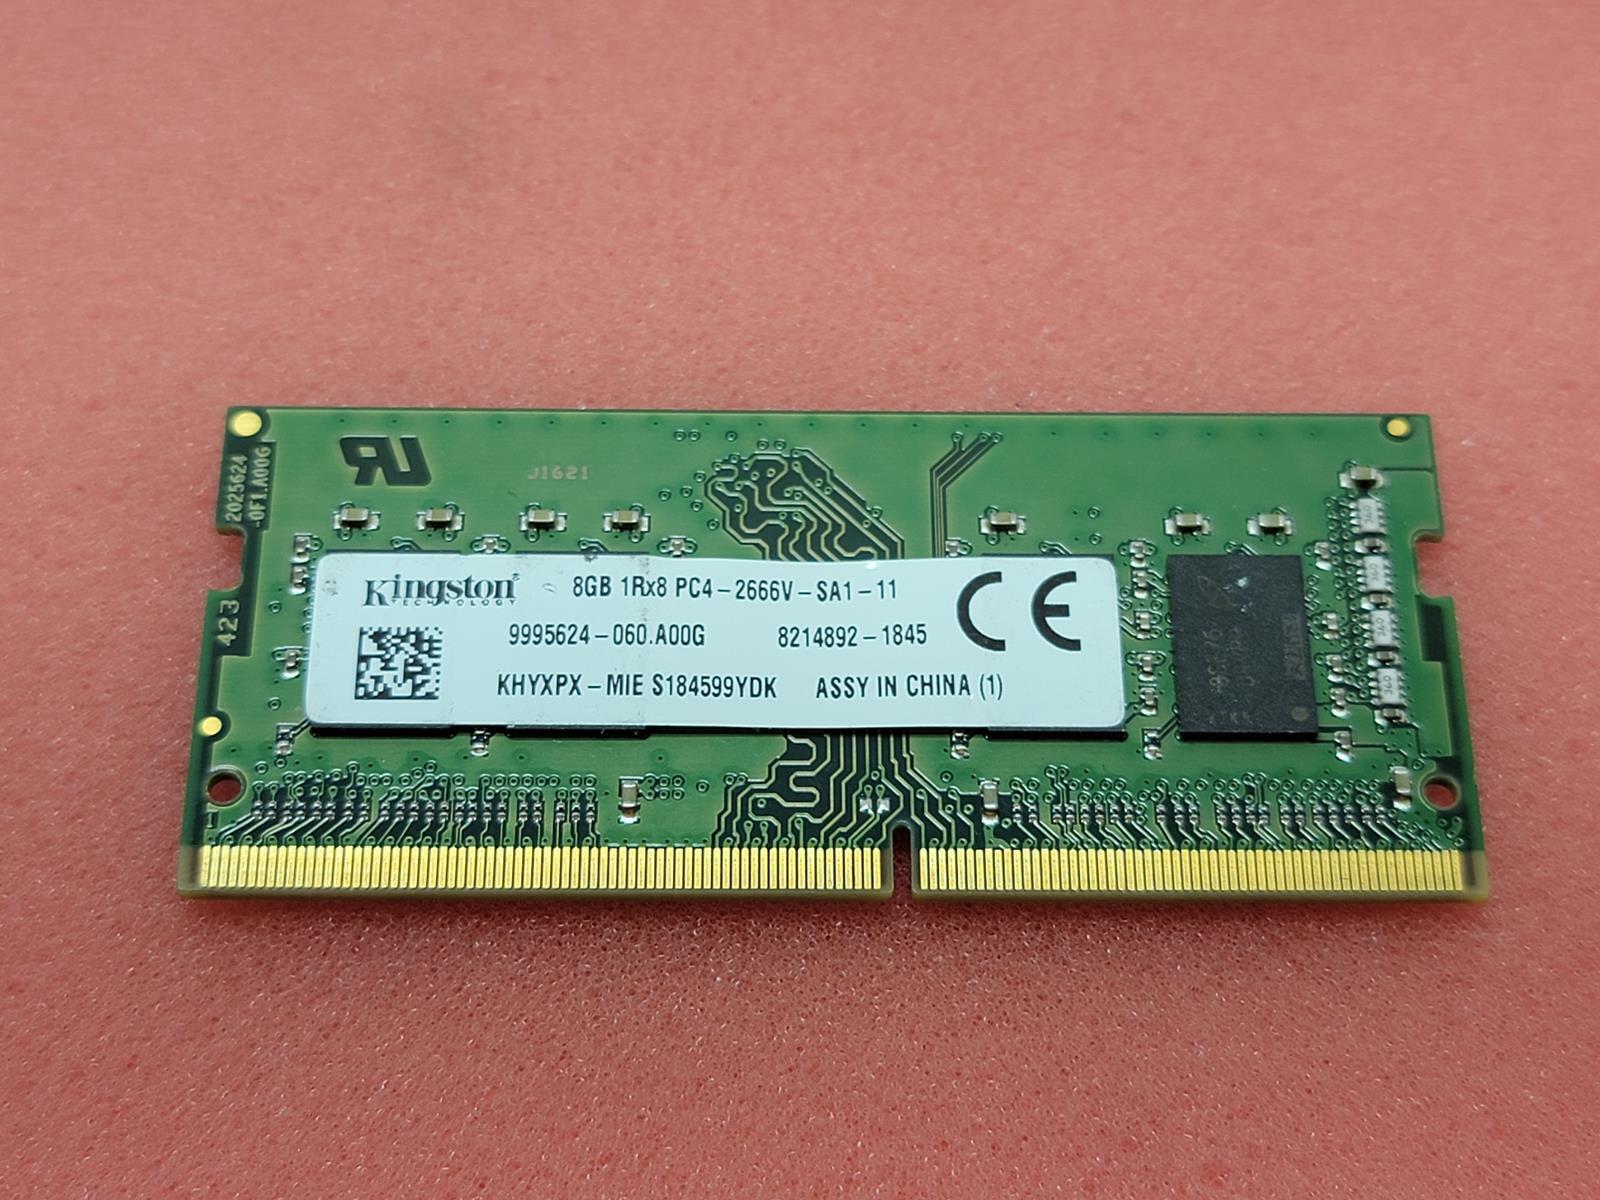 KINGSTON 8GB DDR4 SODIMM LAPTOP RAM 2666V KHYXPX-MIESKU 4589